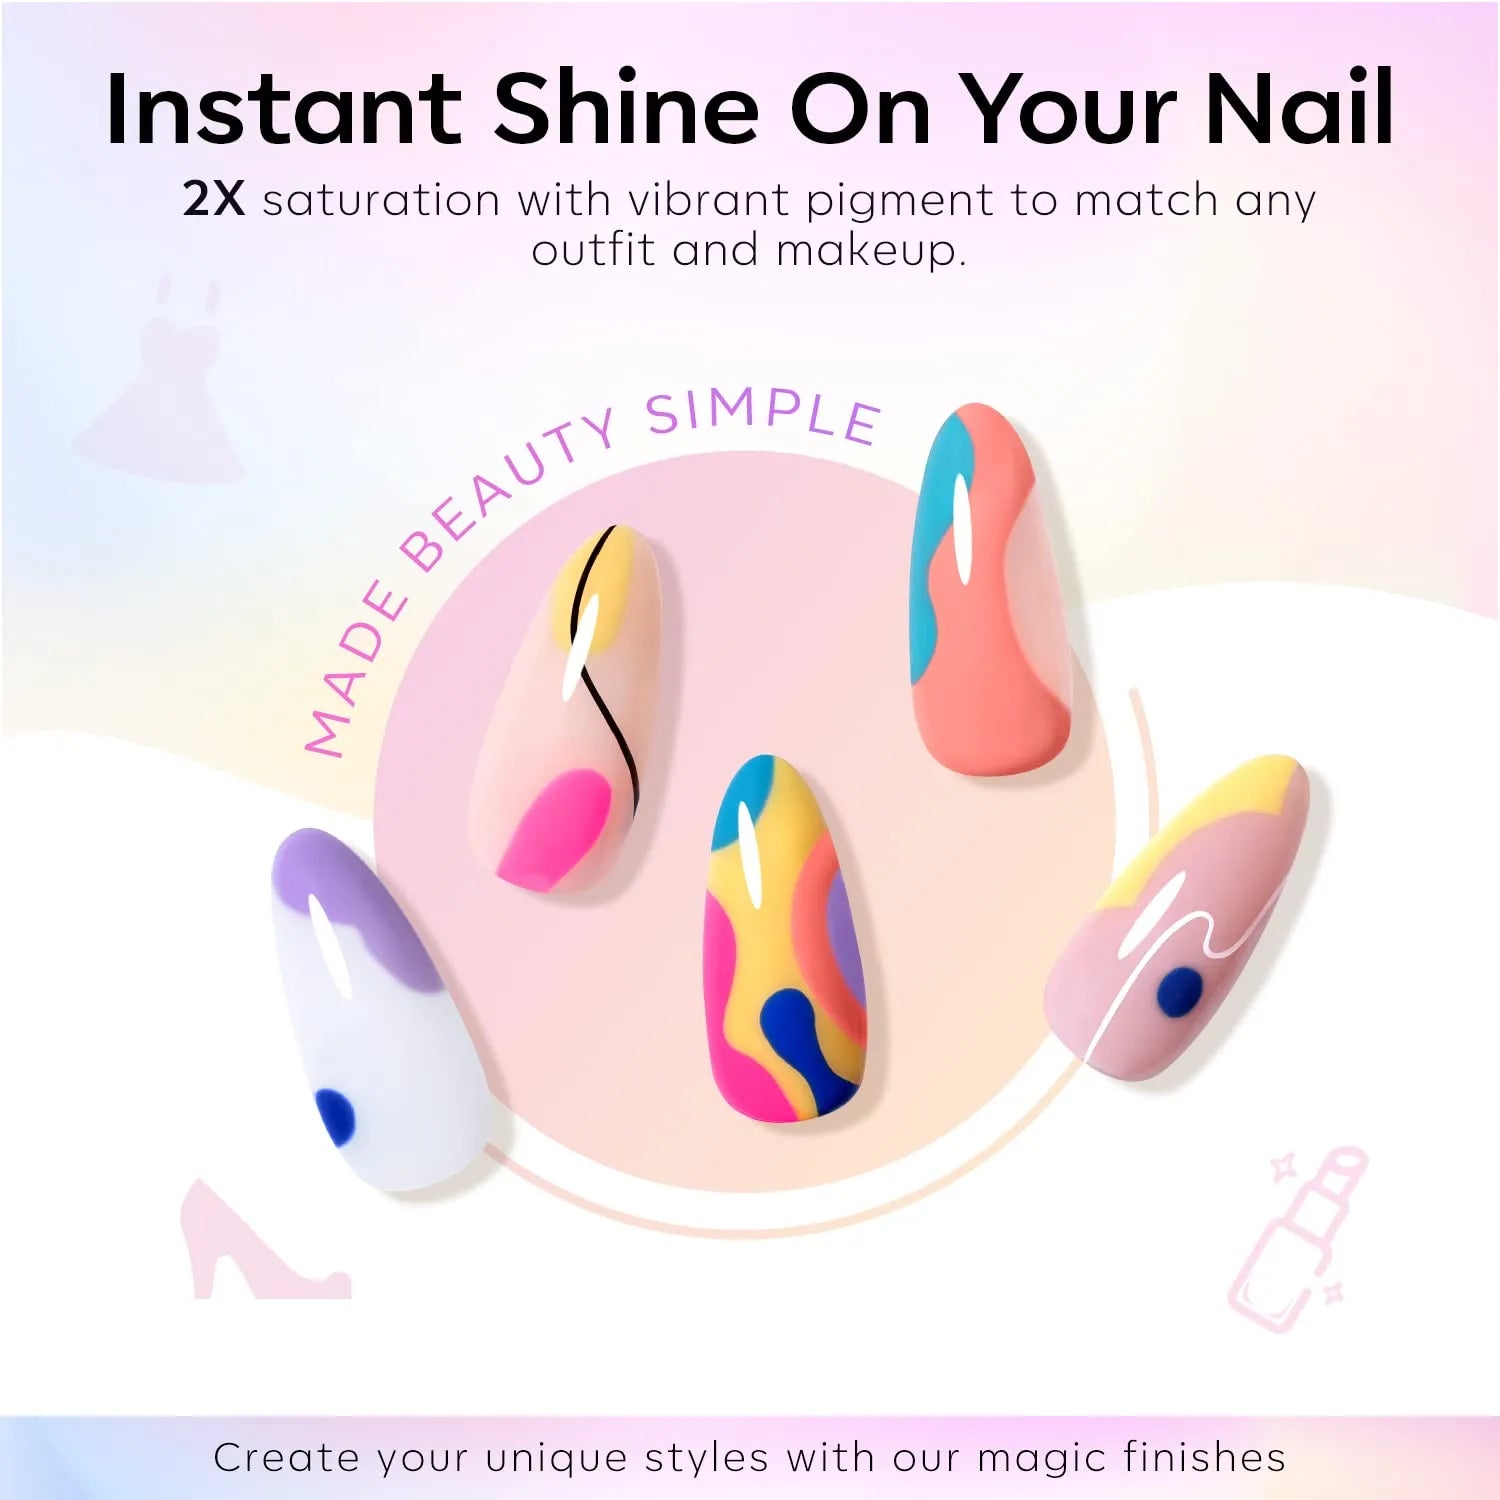 Neon Island - 6 Colors Gel Nail Polish Kit